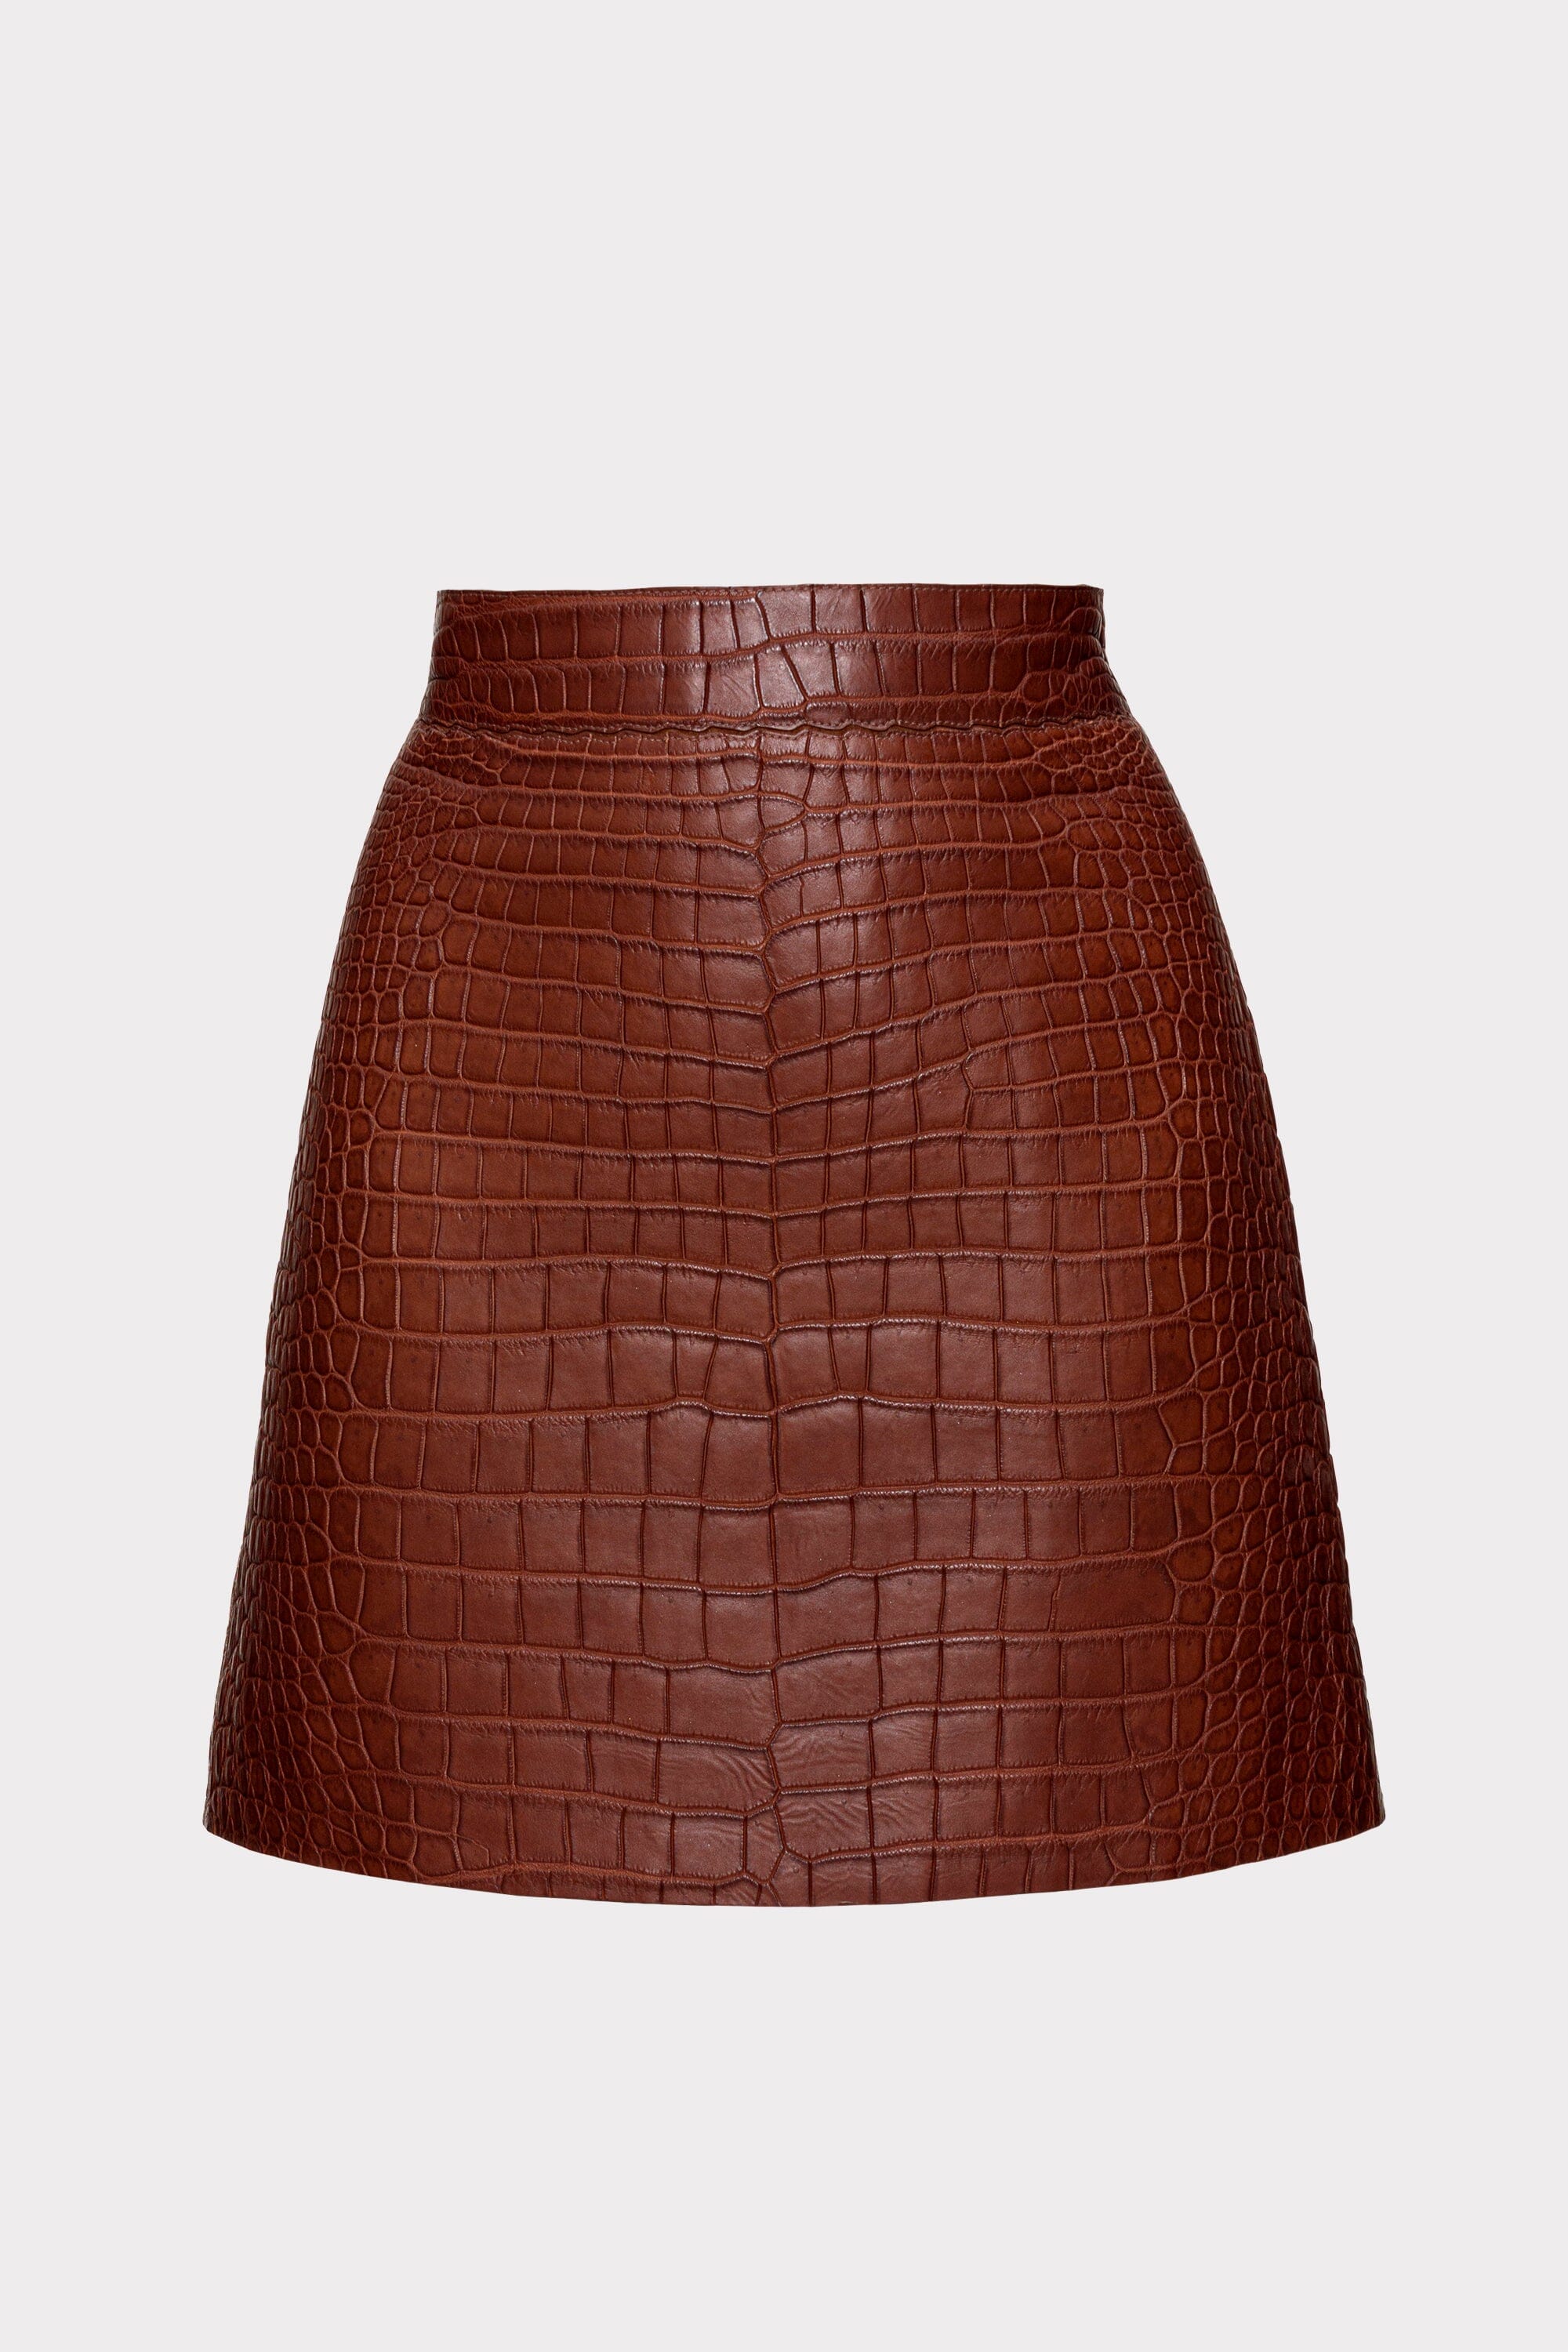 Crocodile Mini Skirt